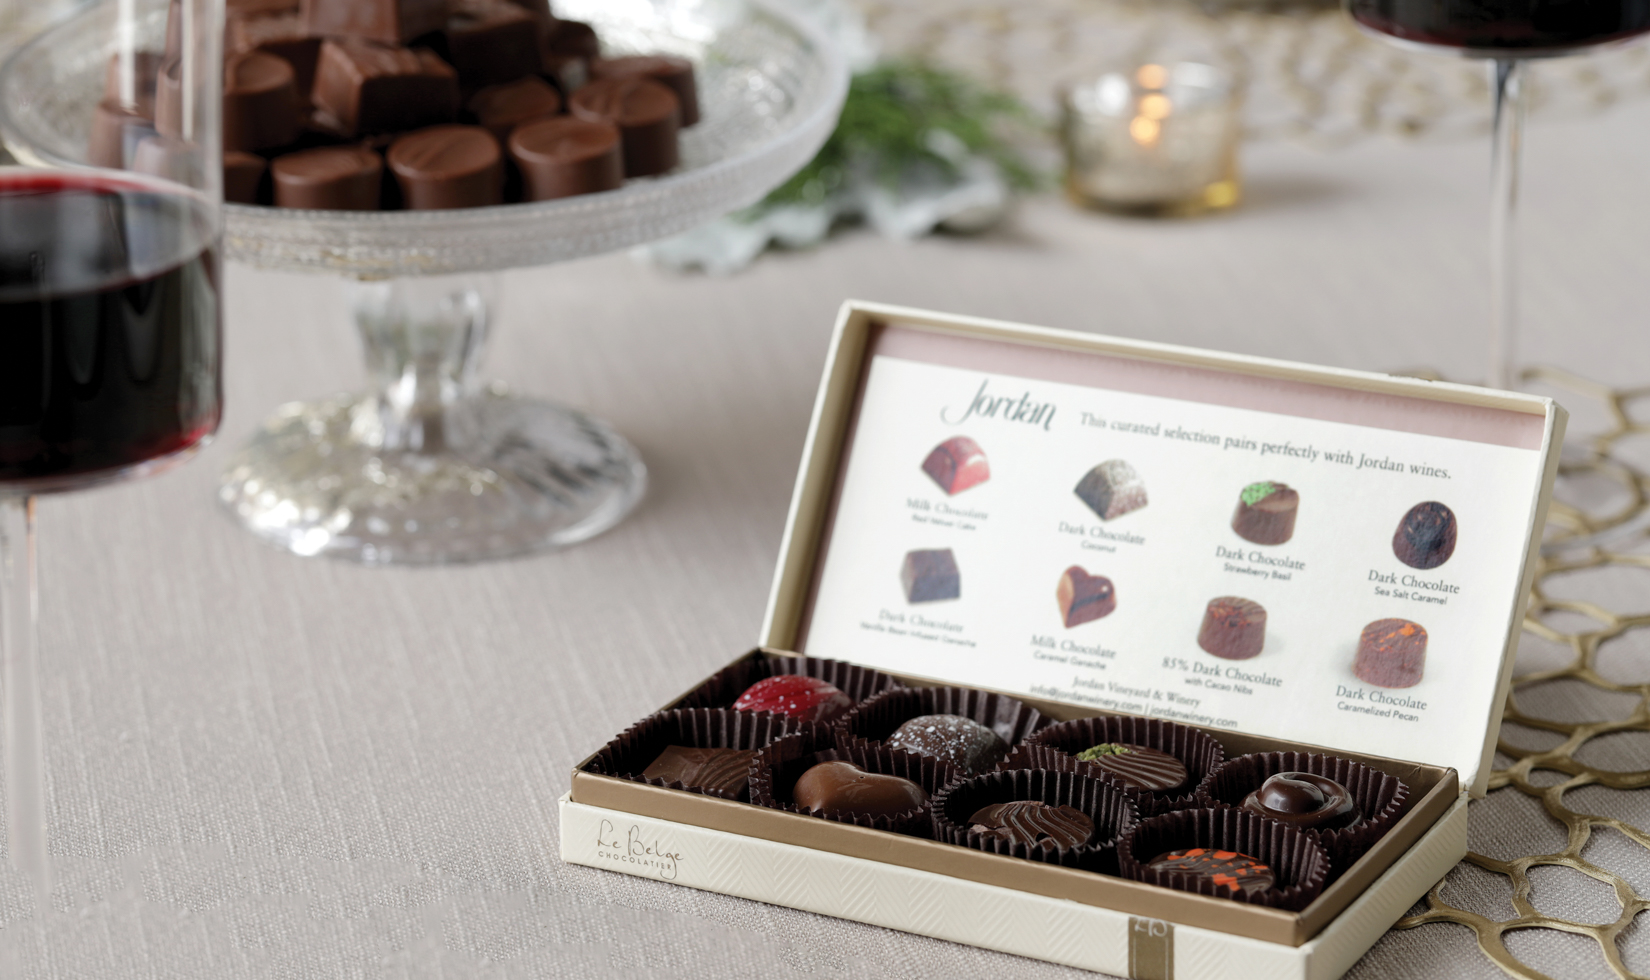 jordan winery chocolate gift box on holiday table